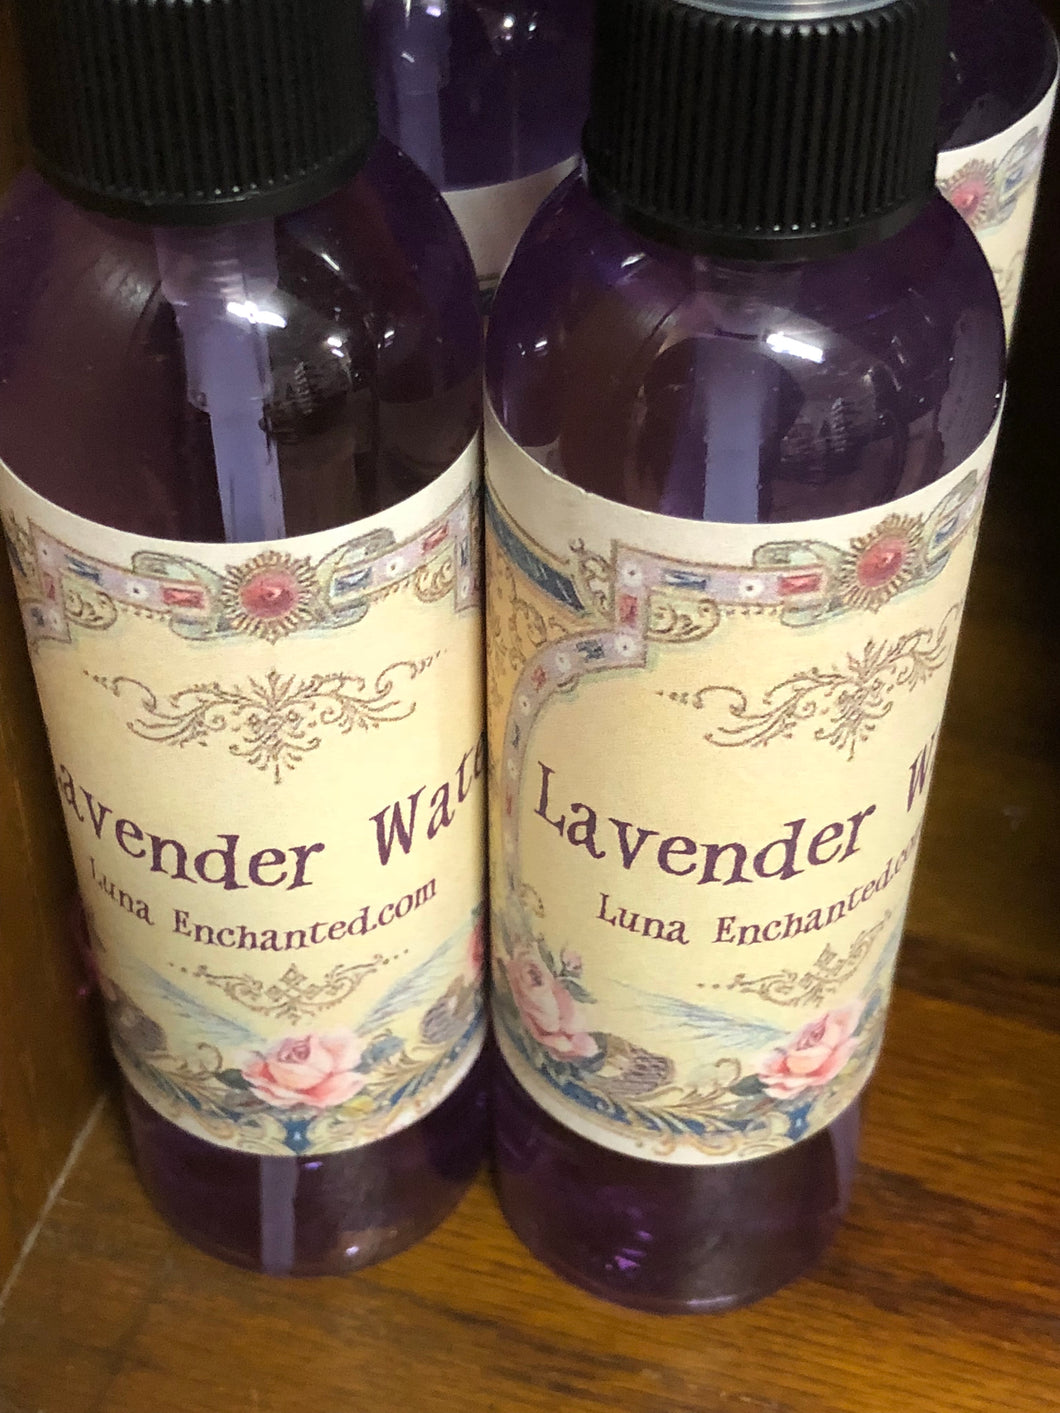 Lavender Water Spray